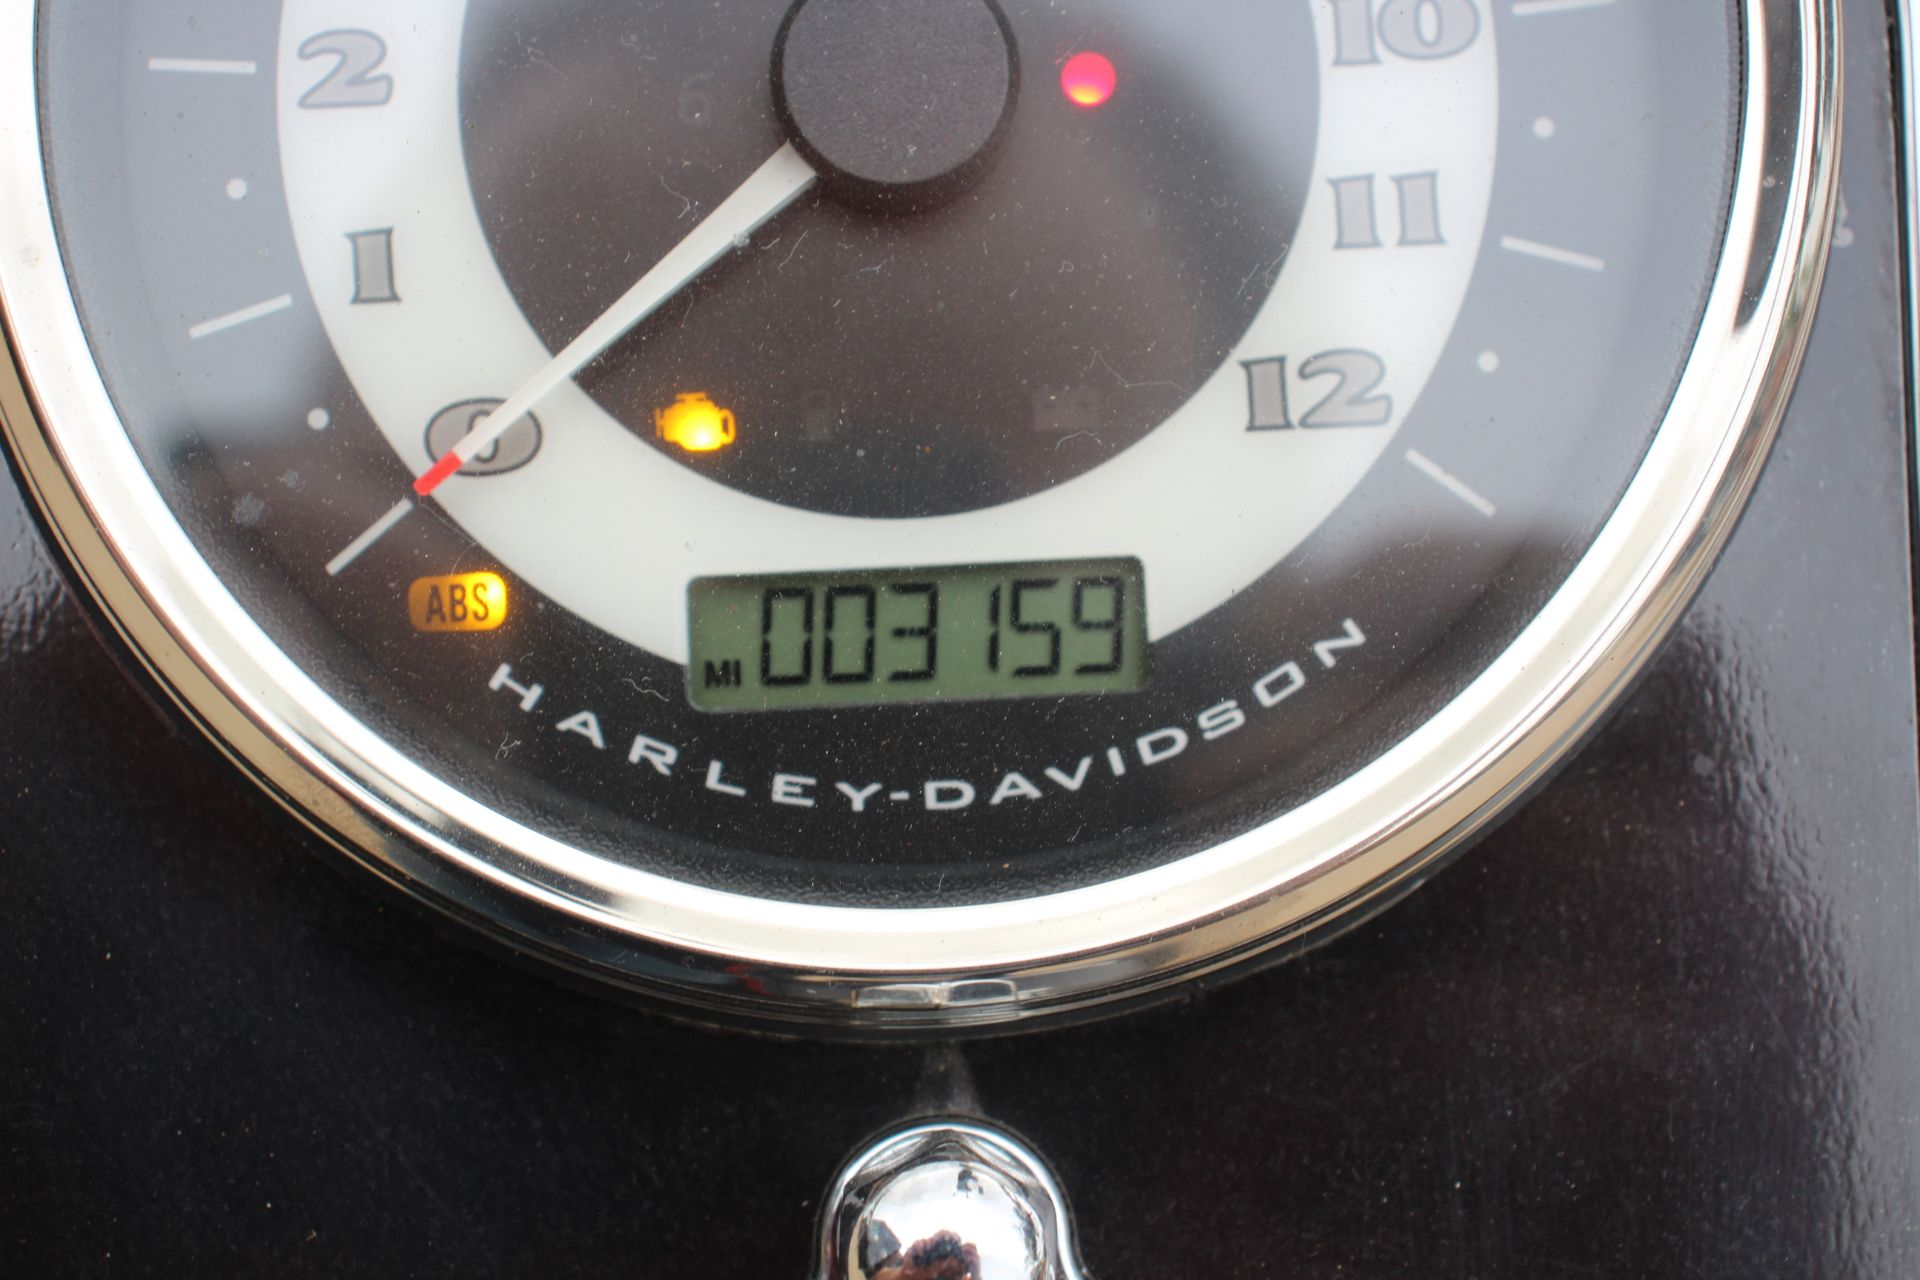 2015 Harley-Davidson Softail Deluxe in Flint, Michigan - Photo 10